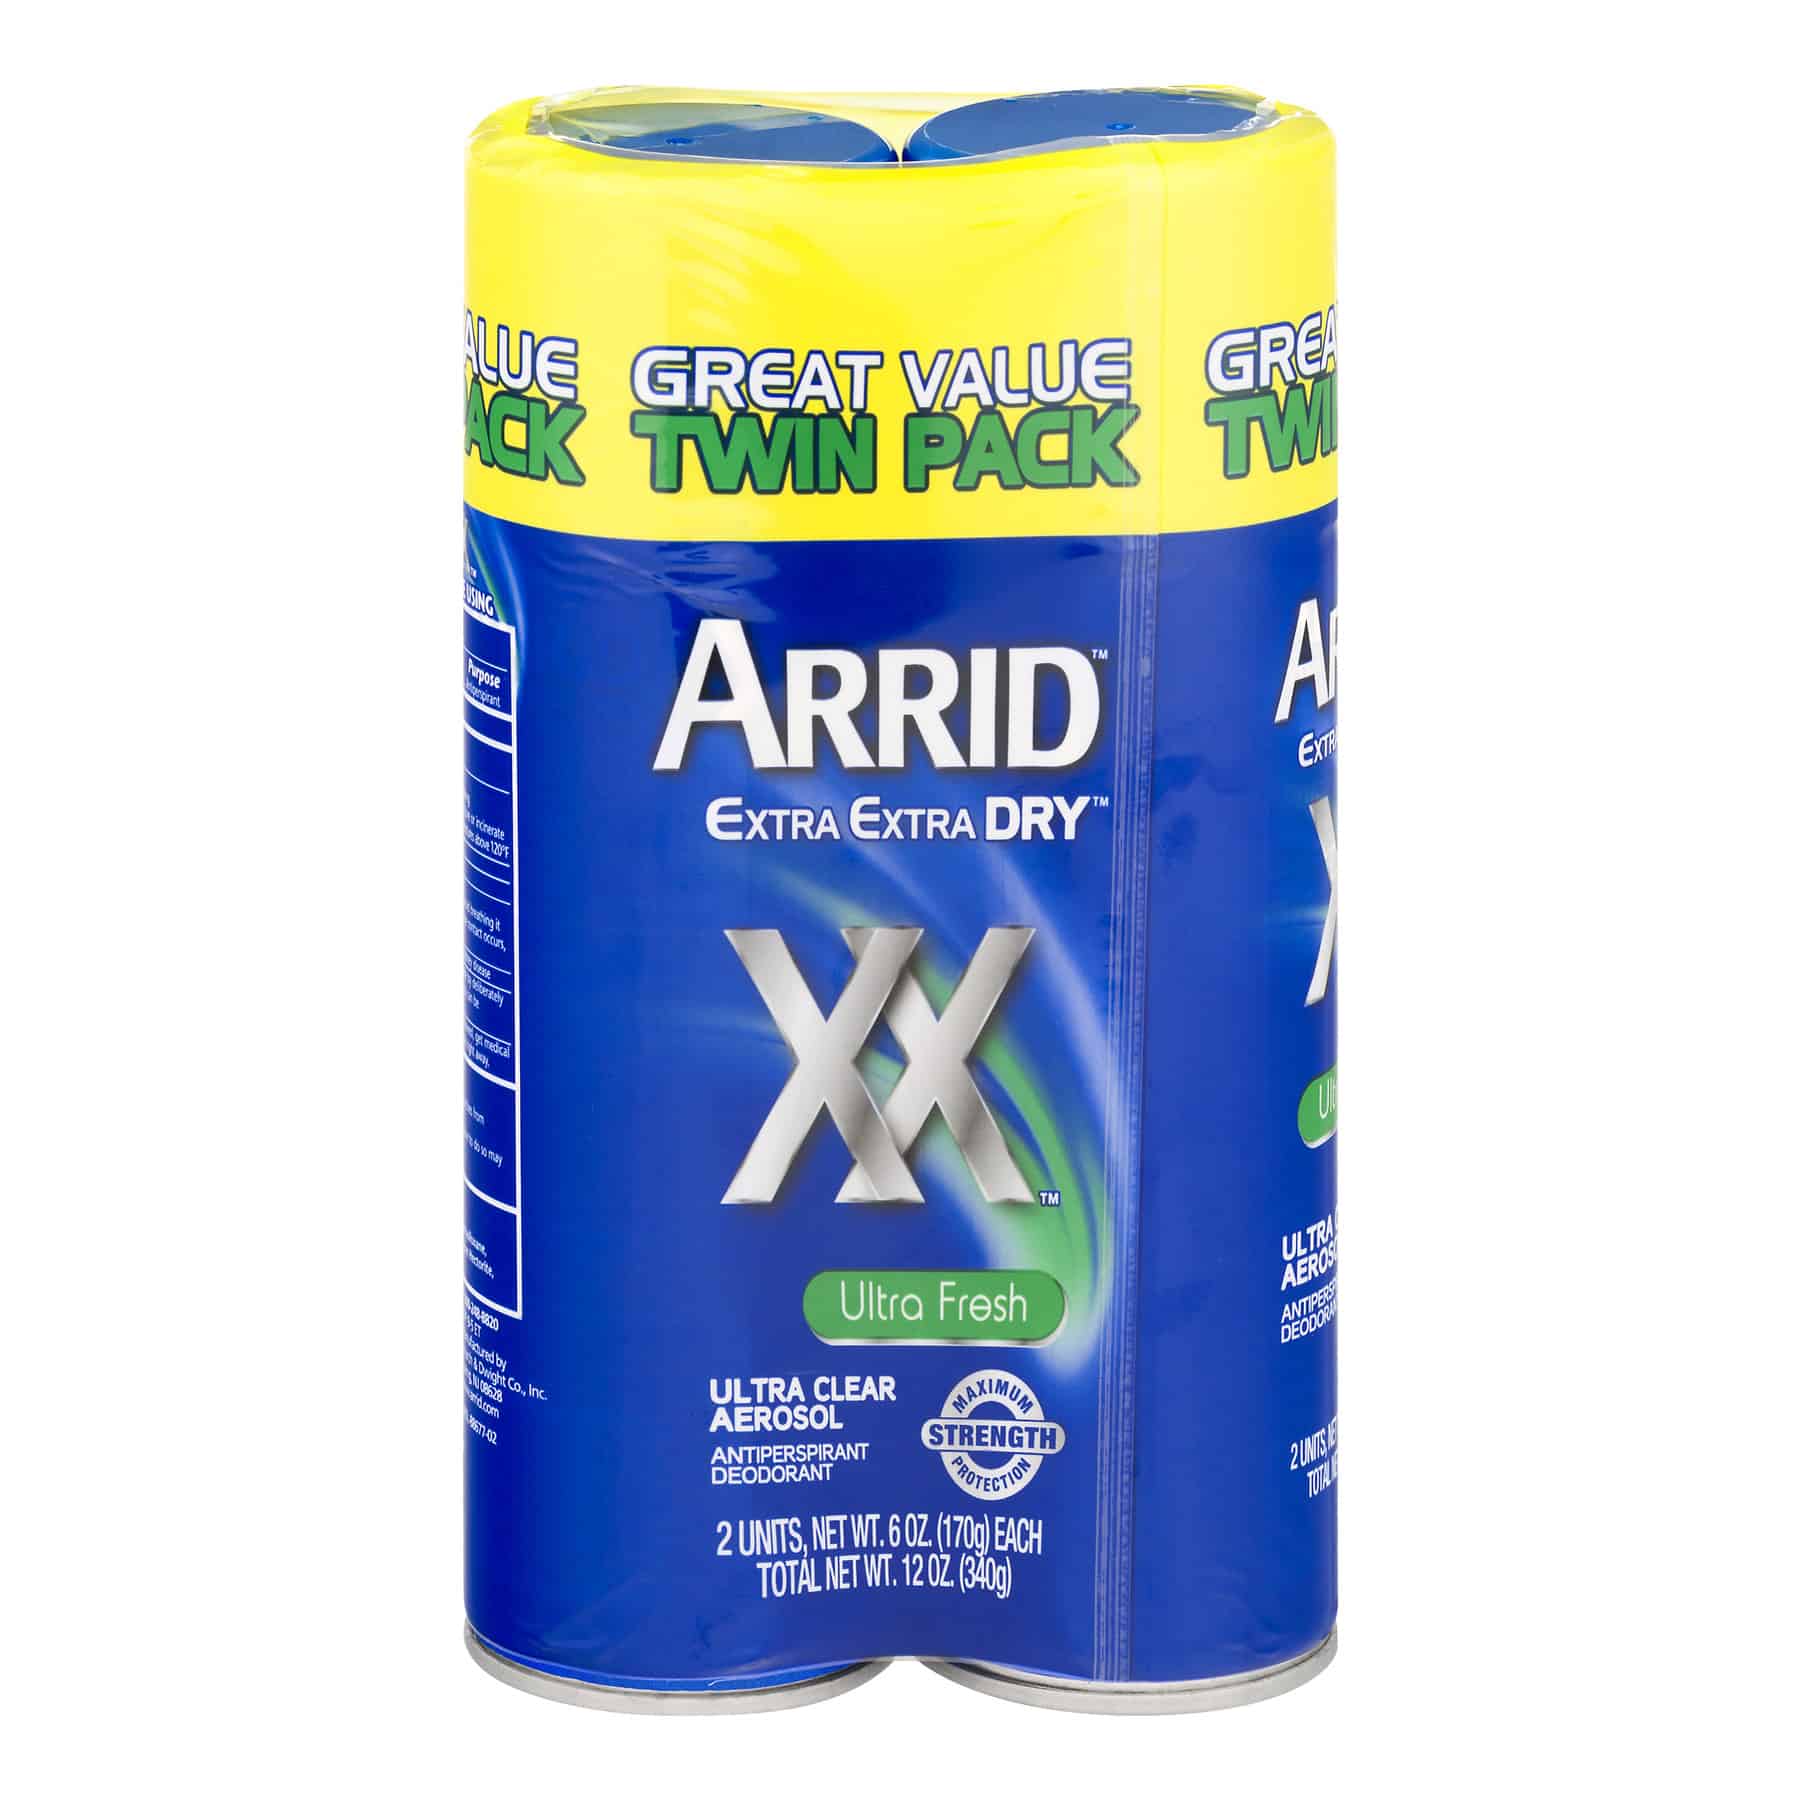 Arrid Extra Dry Antiperspirant Deodorant, 6oz, 2 Twin Packs